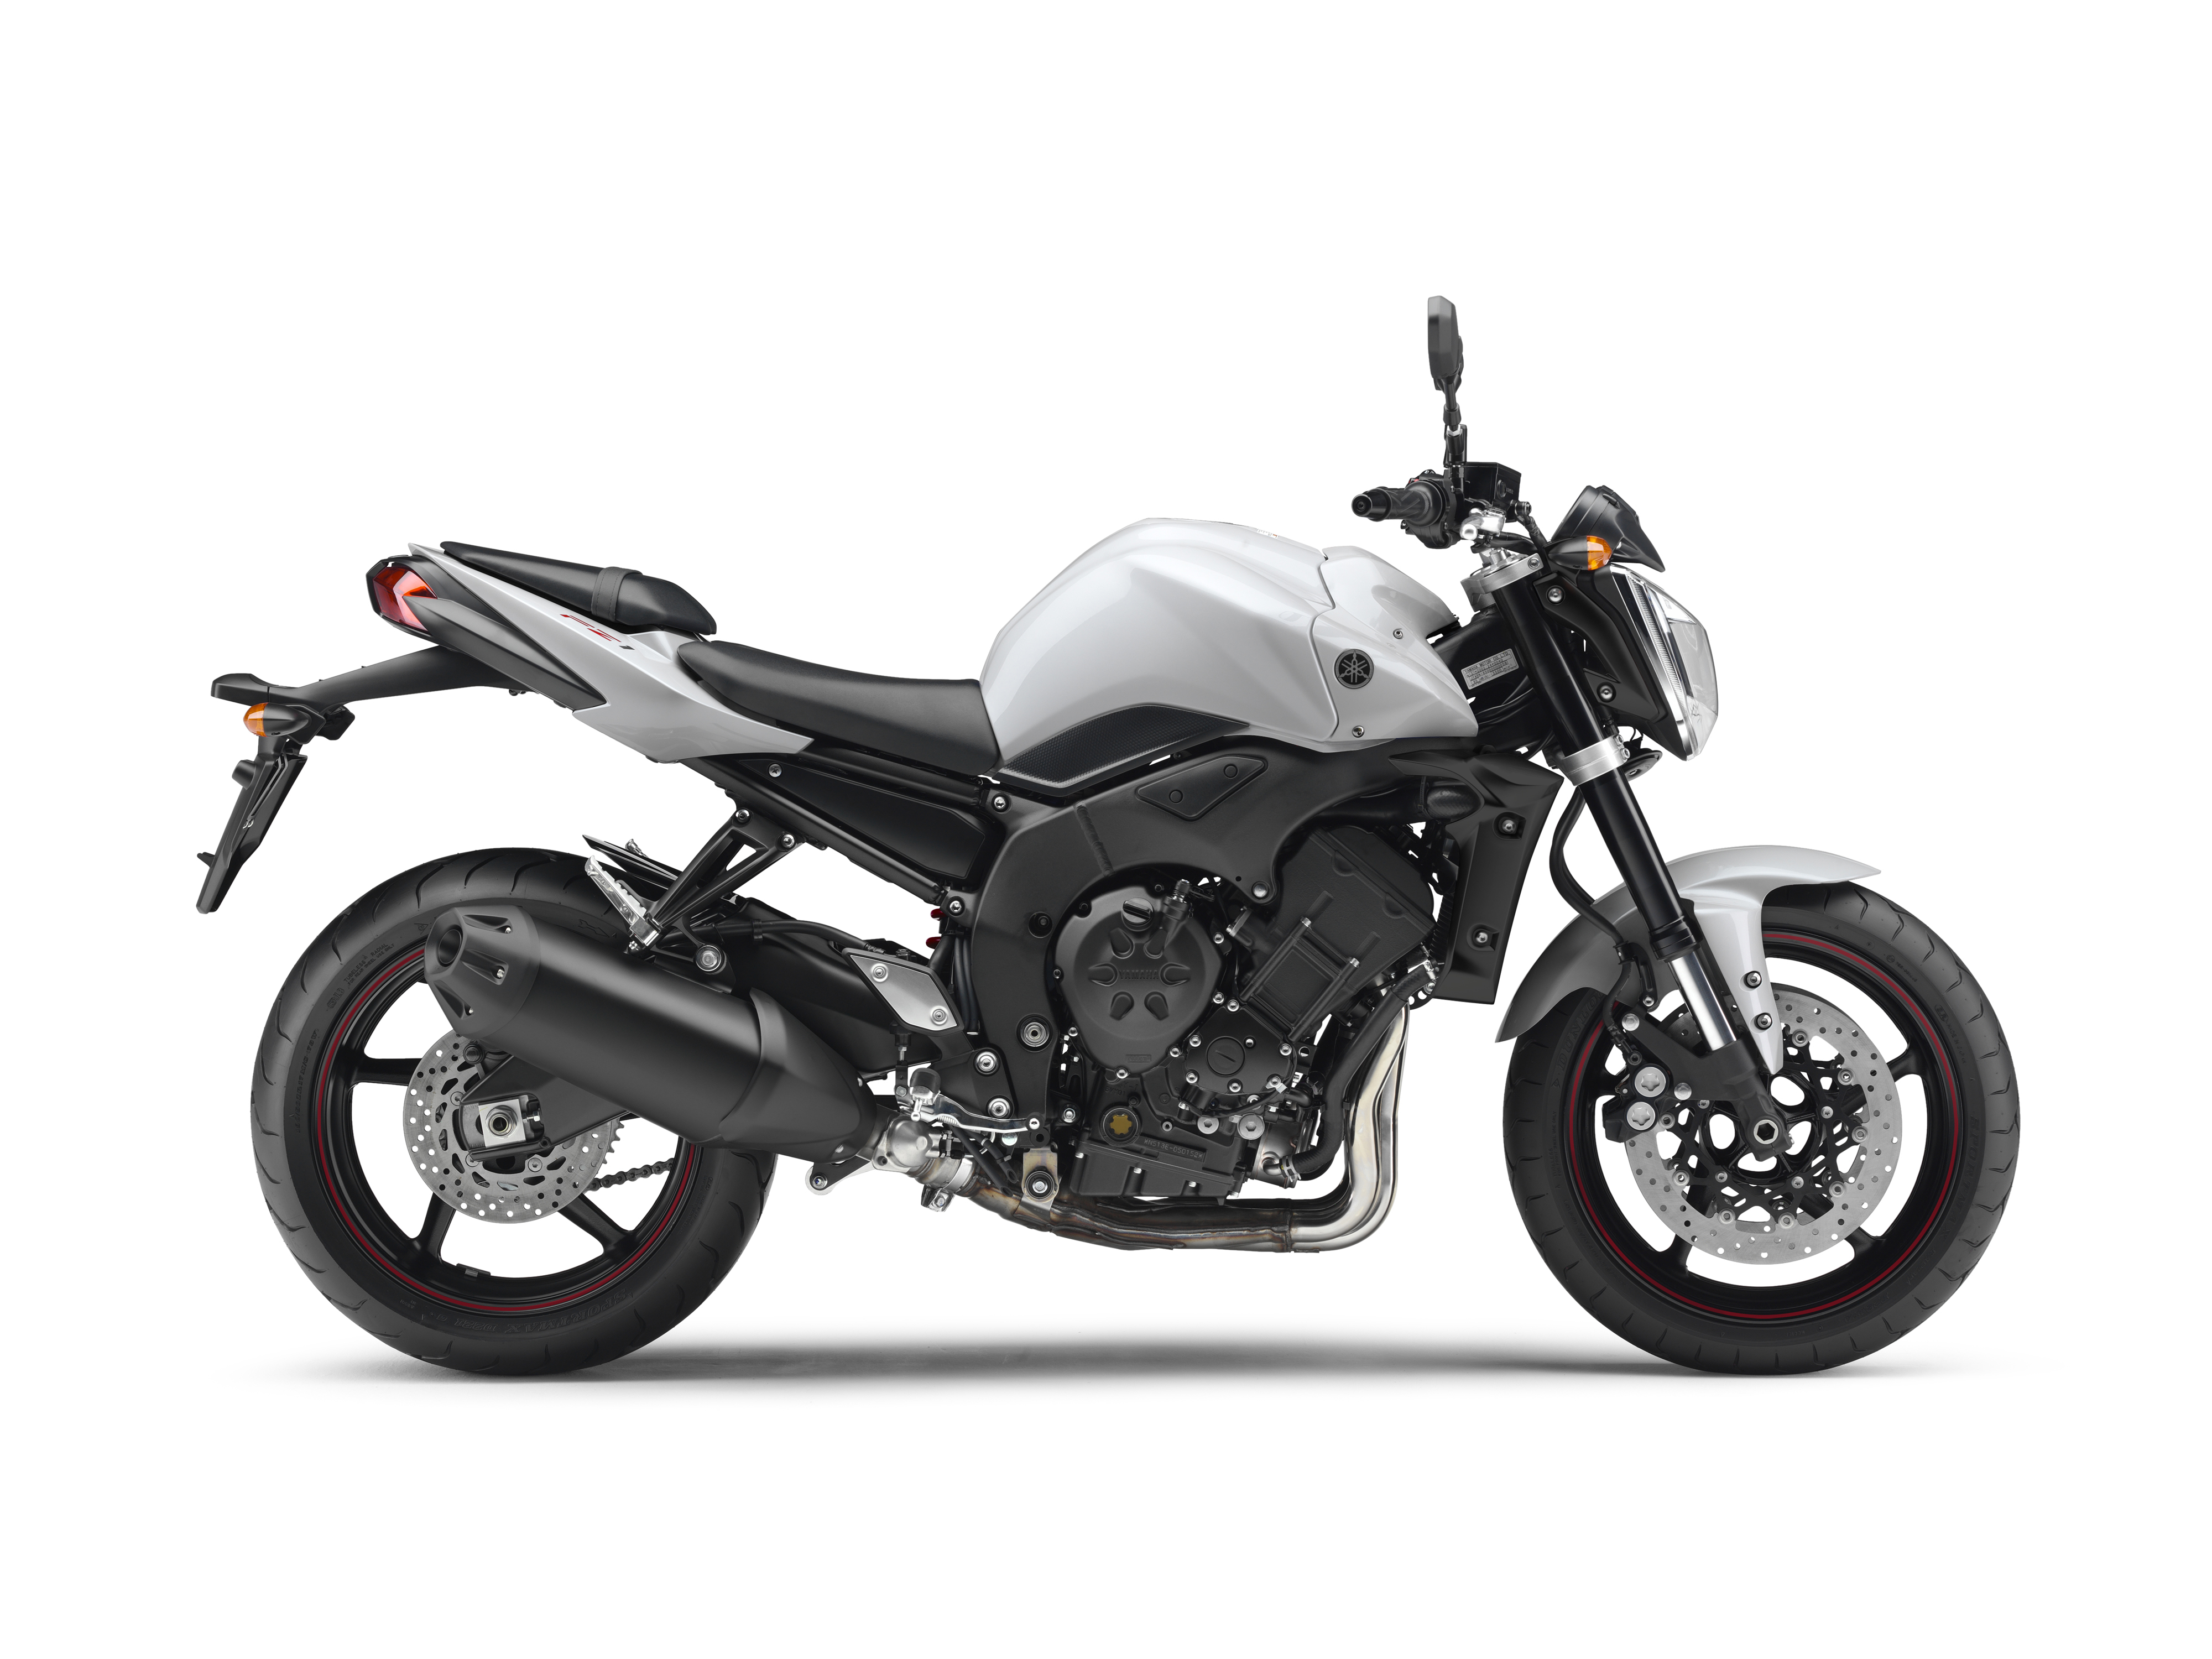 New 2020 Yamaha MT-03 | Motorcycles in EL Cajon CA | N/A 